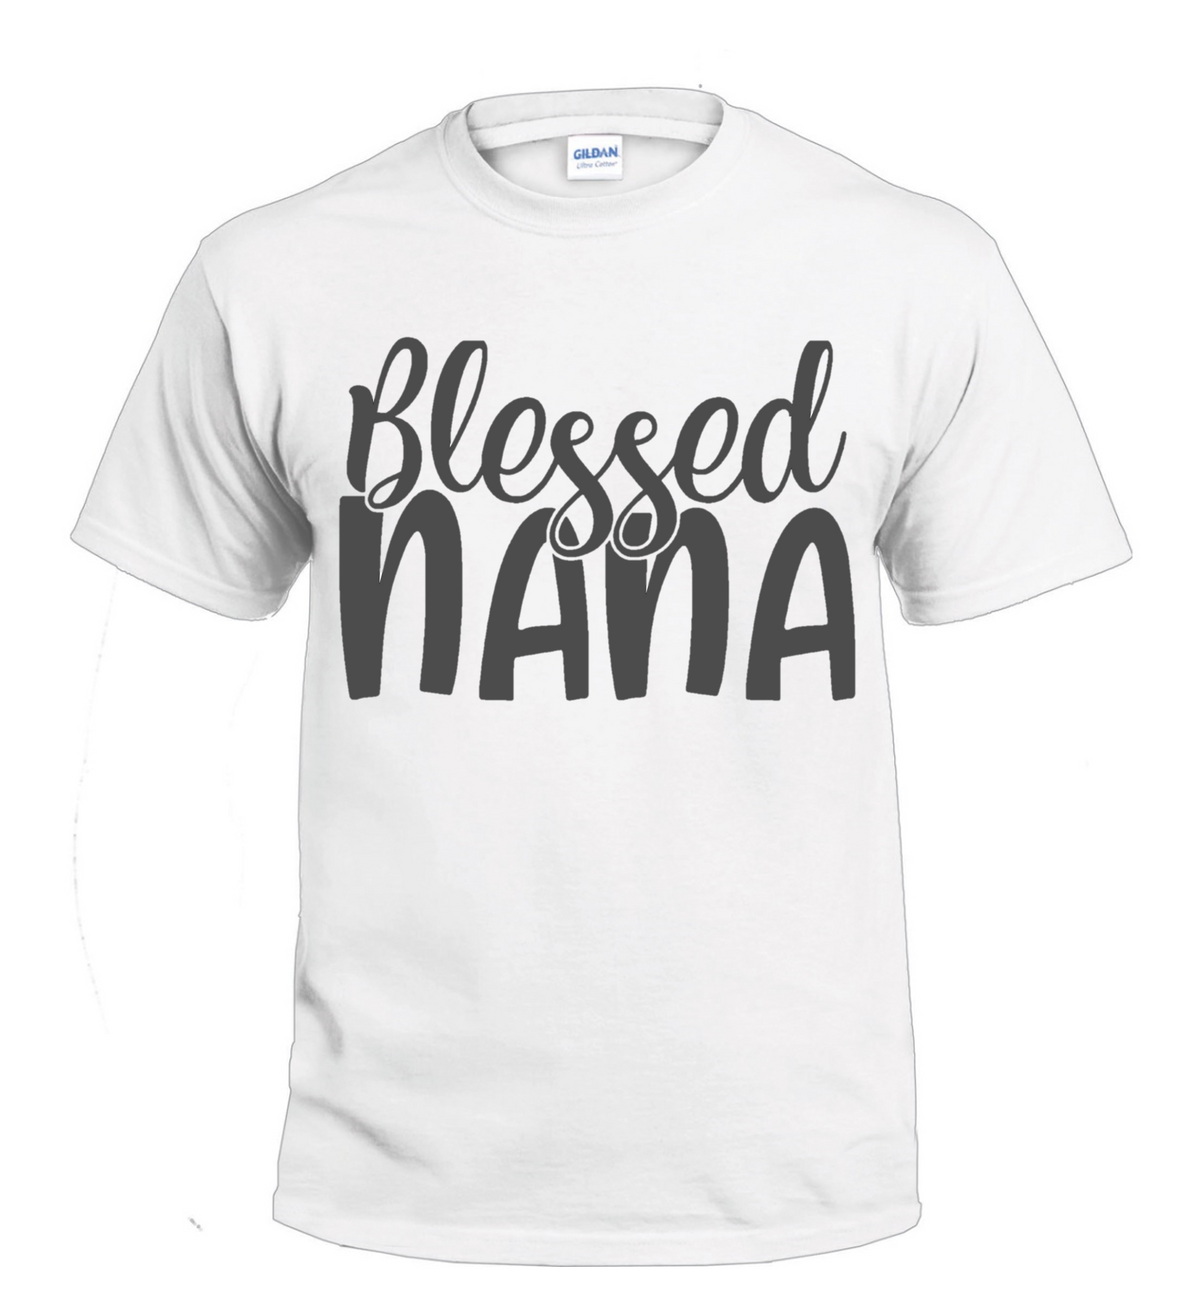 Blessed Nana t-shirt